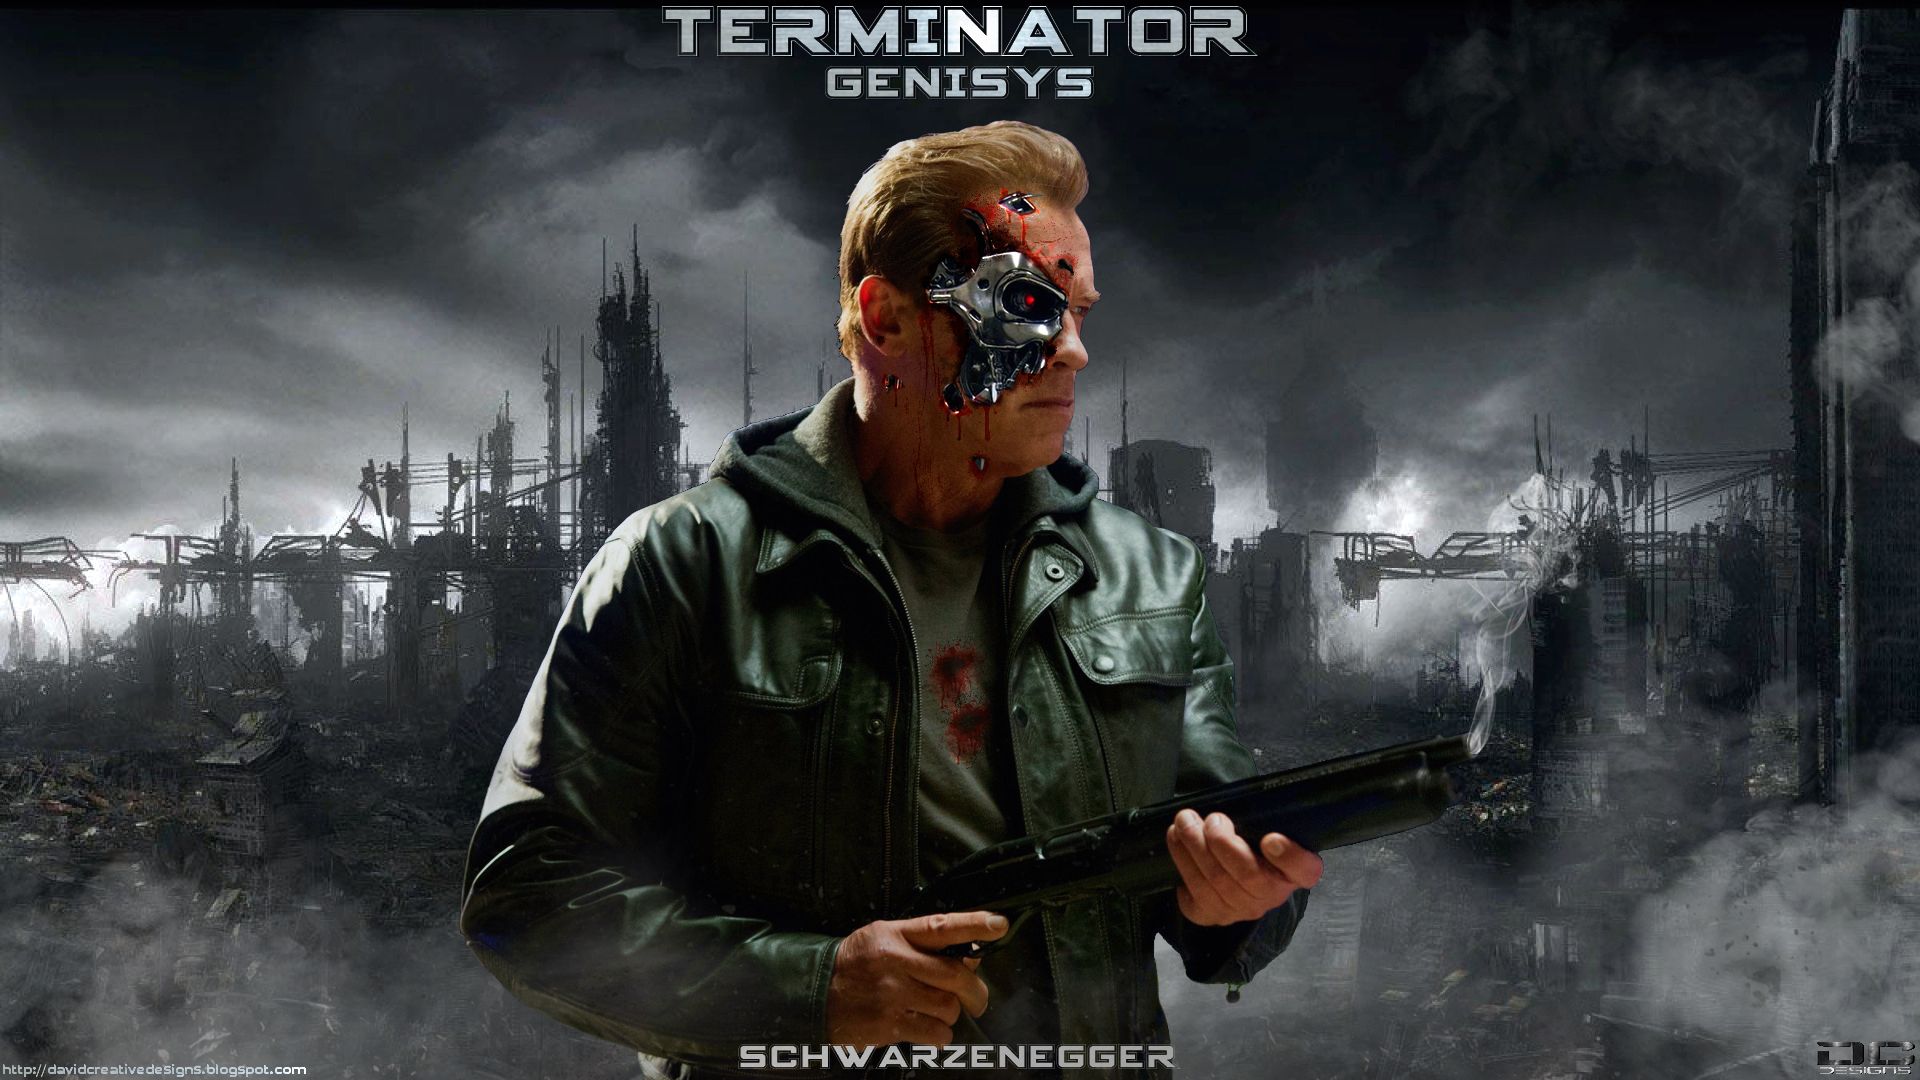 Terminator Genisys (2015) / Terminator 5: & Film Review